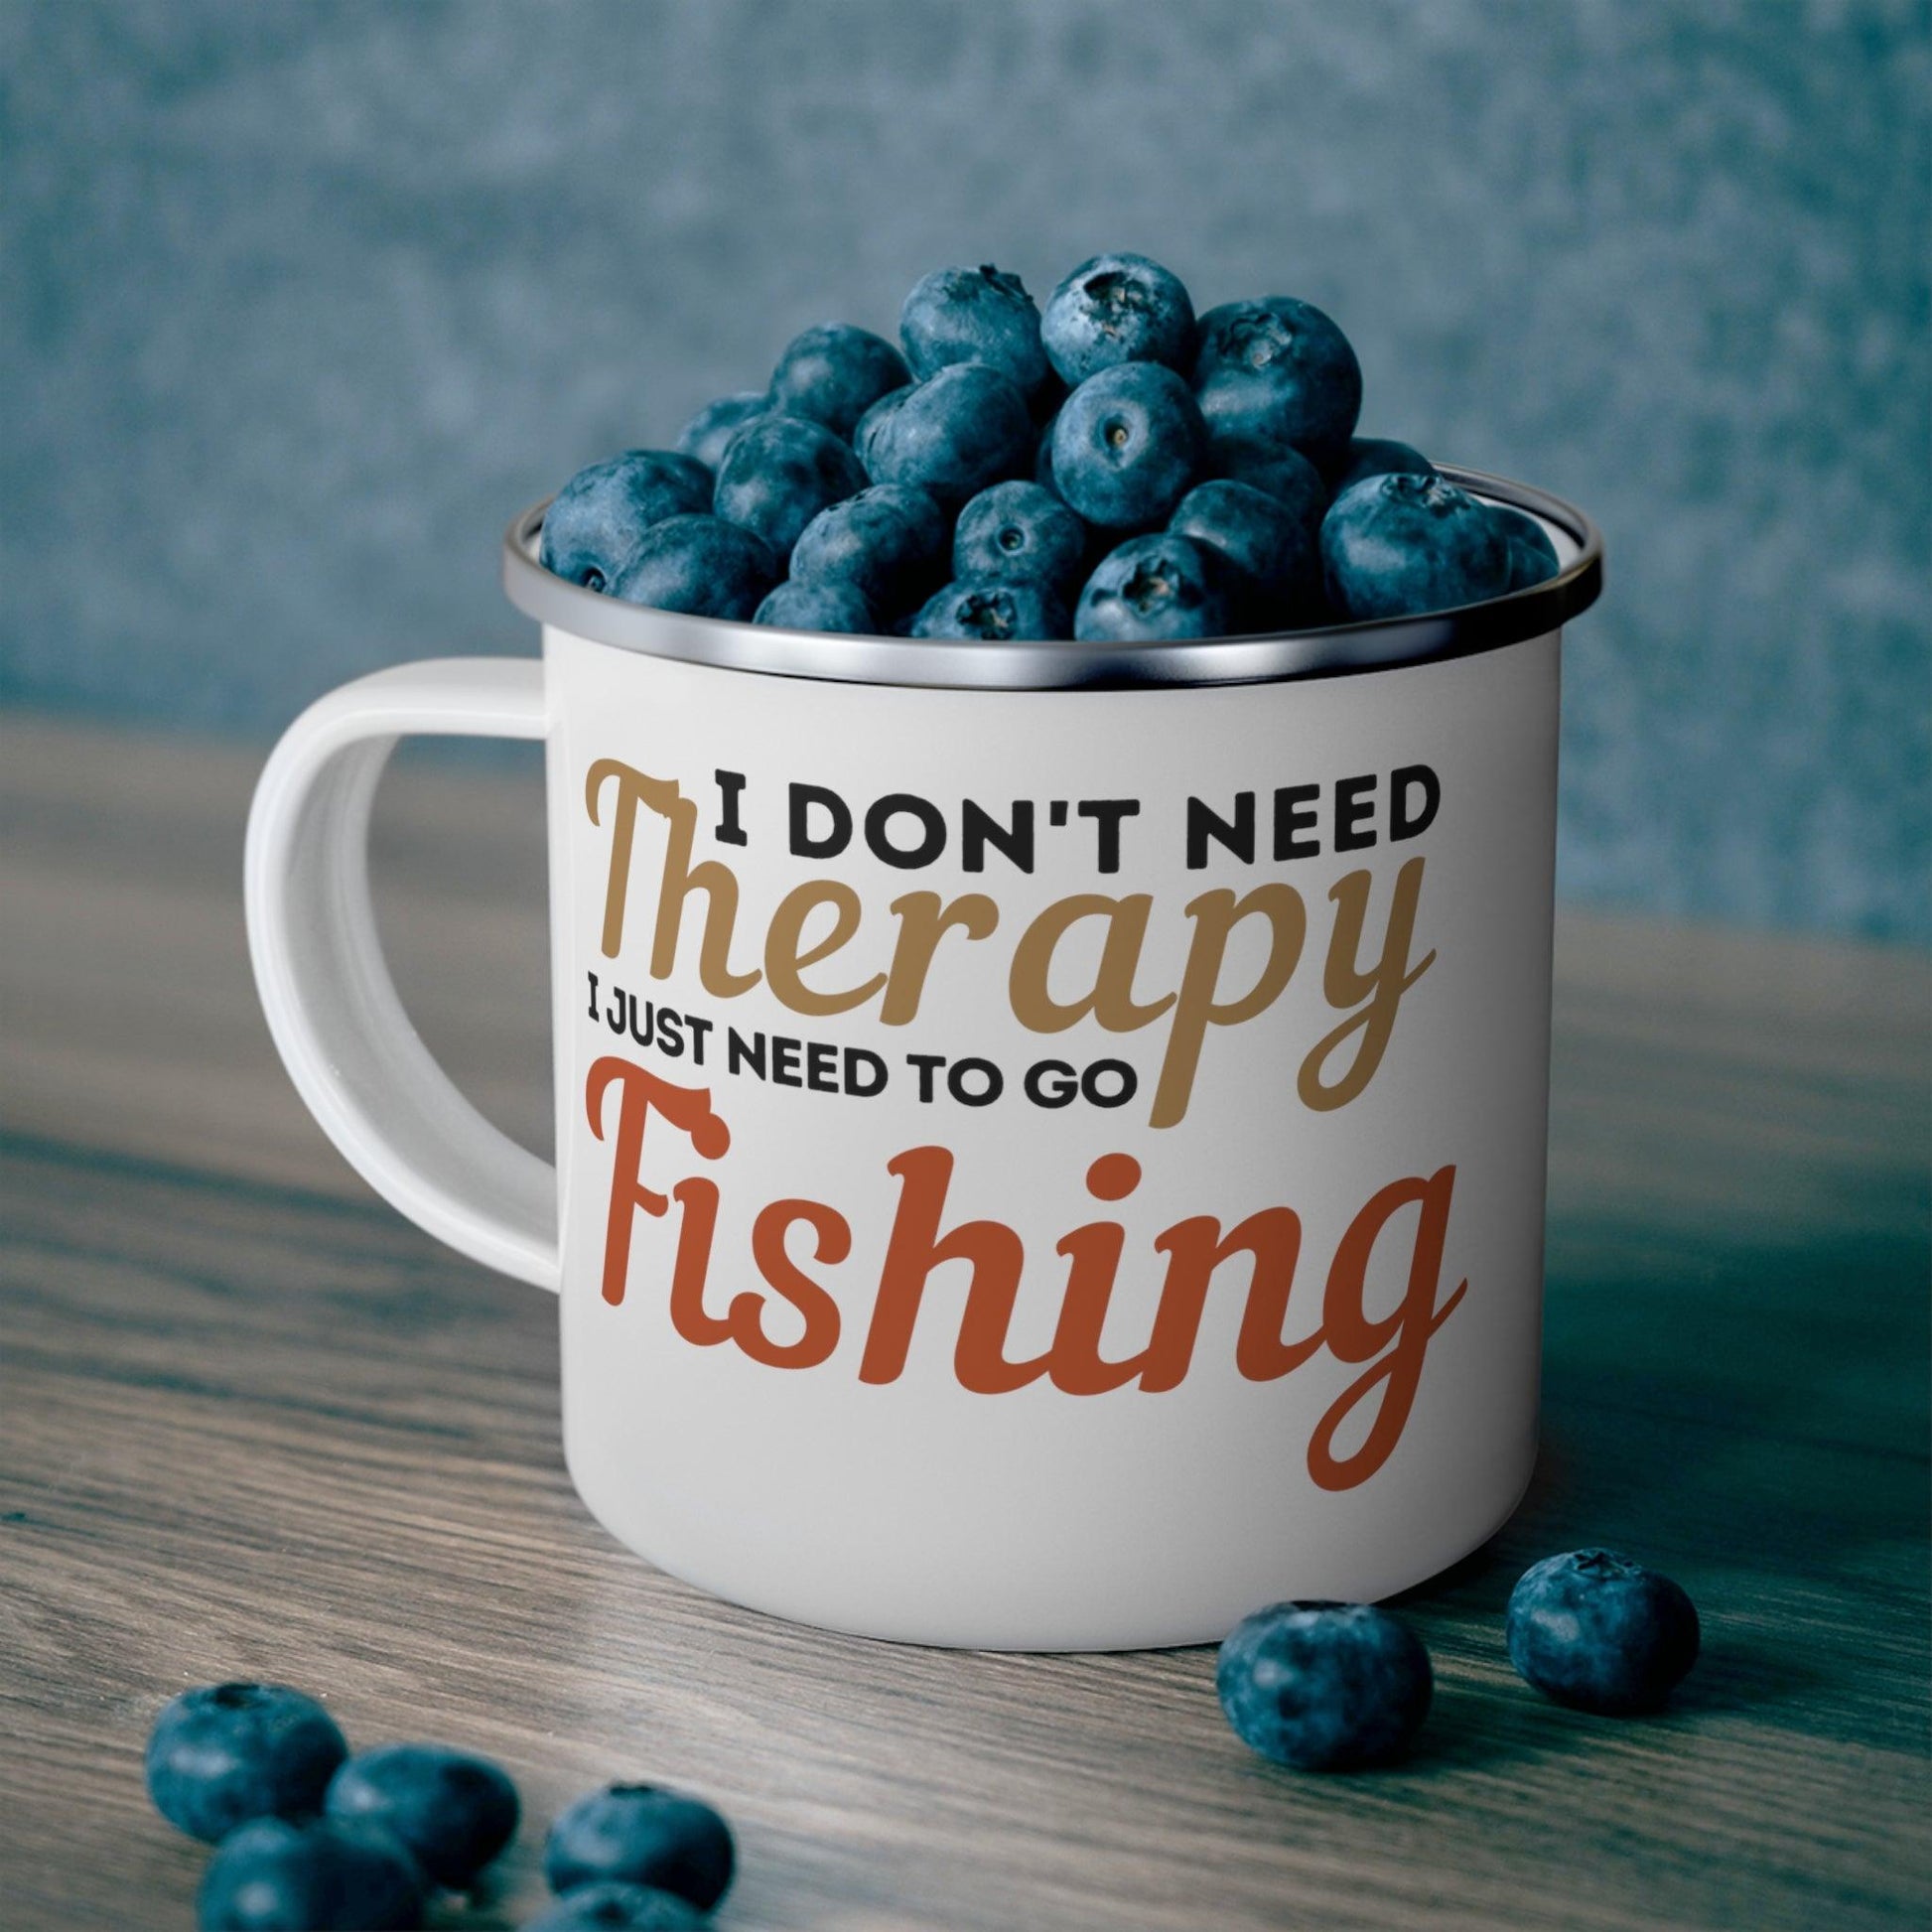 I don't need Therapy fishing Mug, Enamel Fishing Mug, Camping gift, Gift for dad, Father's day gift, Dad Mug, Dad gift - Giftsmojo